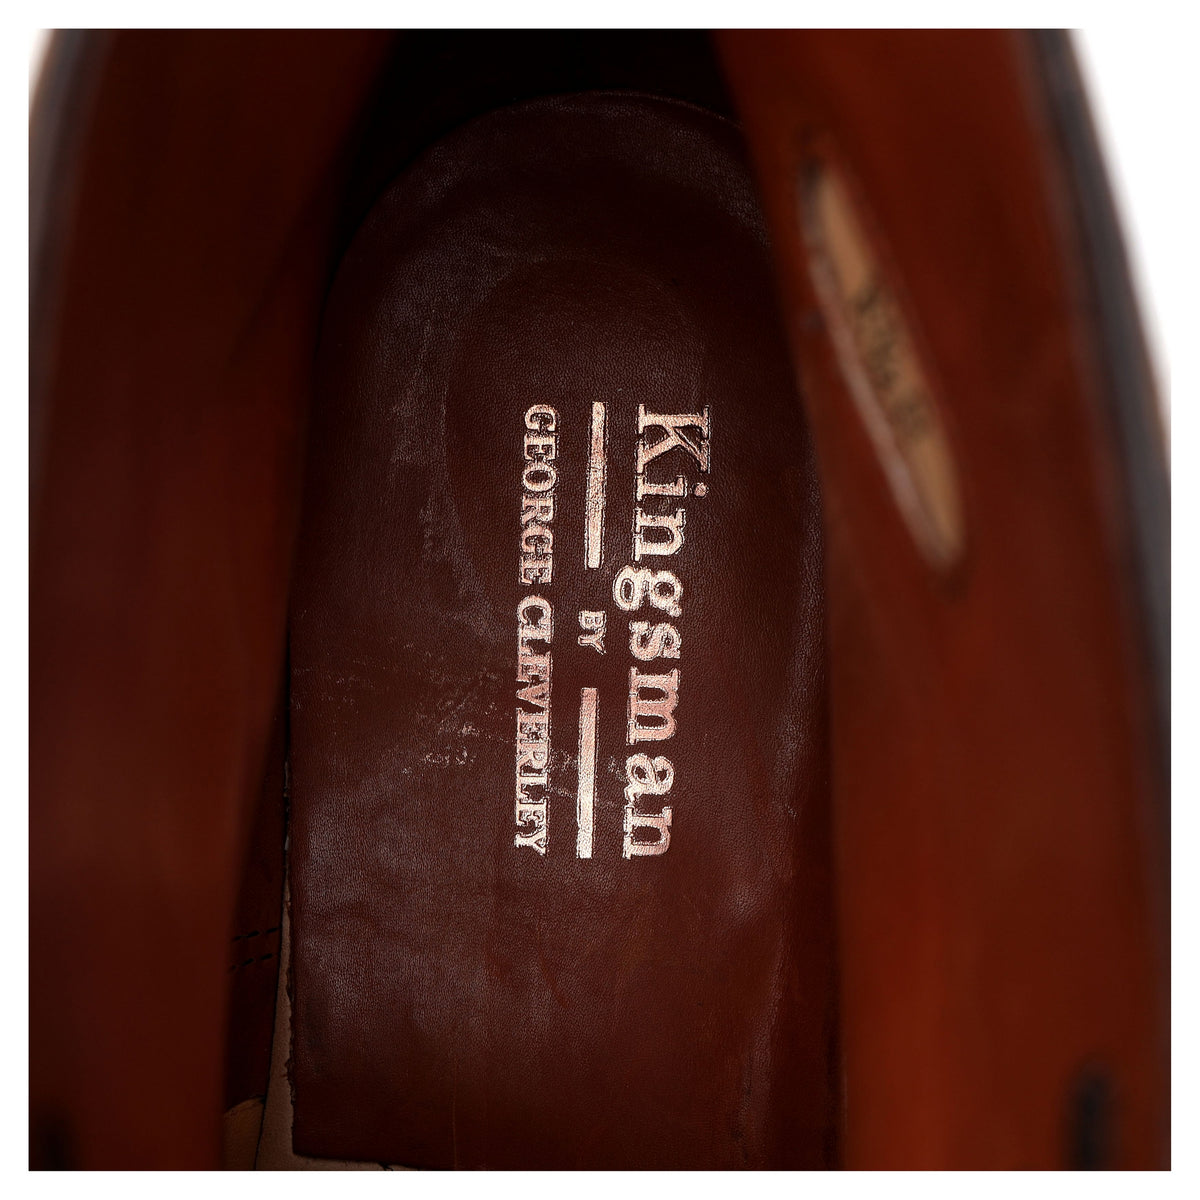 Kingsman &#39;Taron&#39; Tan Brown Leather Boots UK 8.5 E